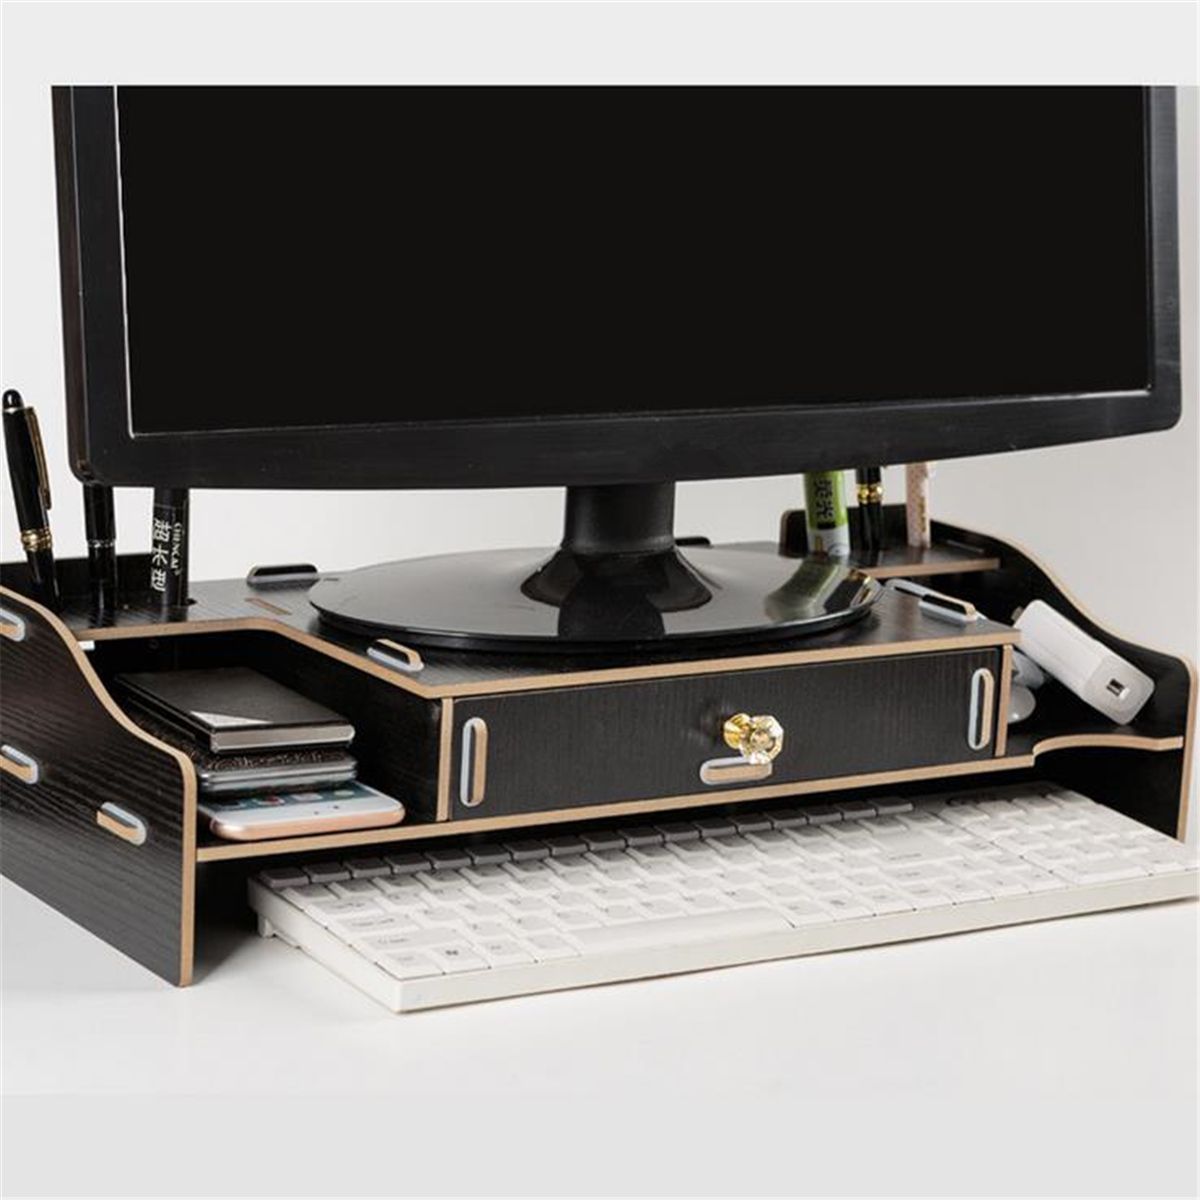 Desktop-Computer-Riser-Stand-TV-LCD-Screen-Monitor-Mount-Display-Desk-Organizer-Monitor-Bracket-1635281